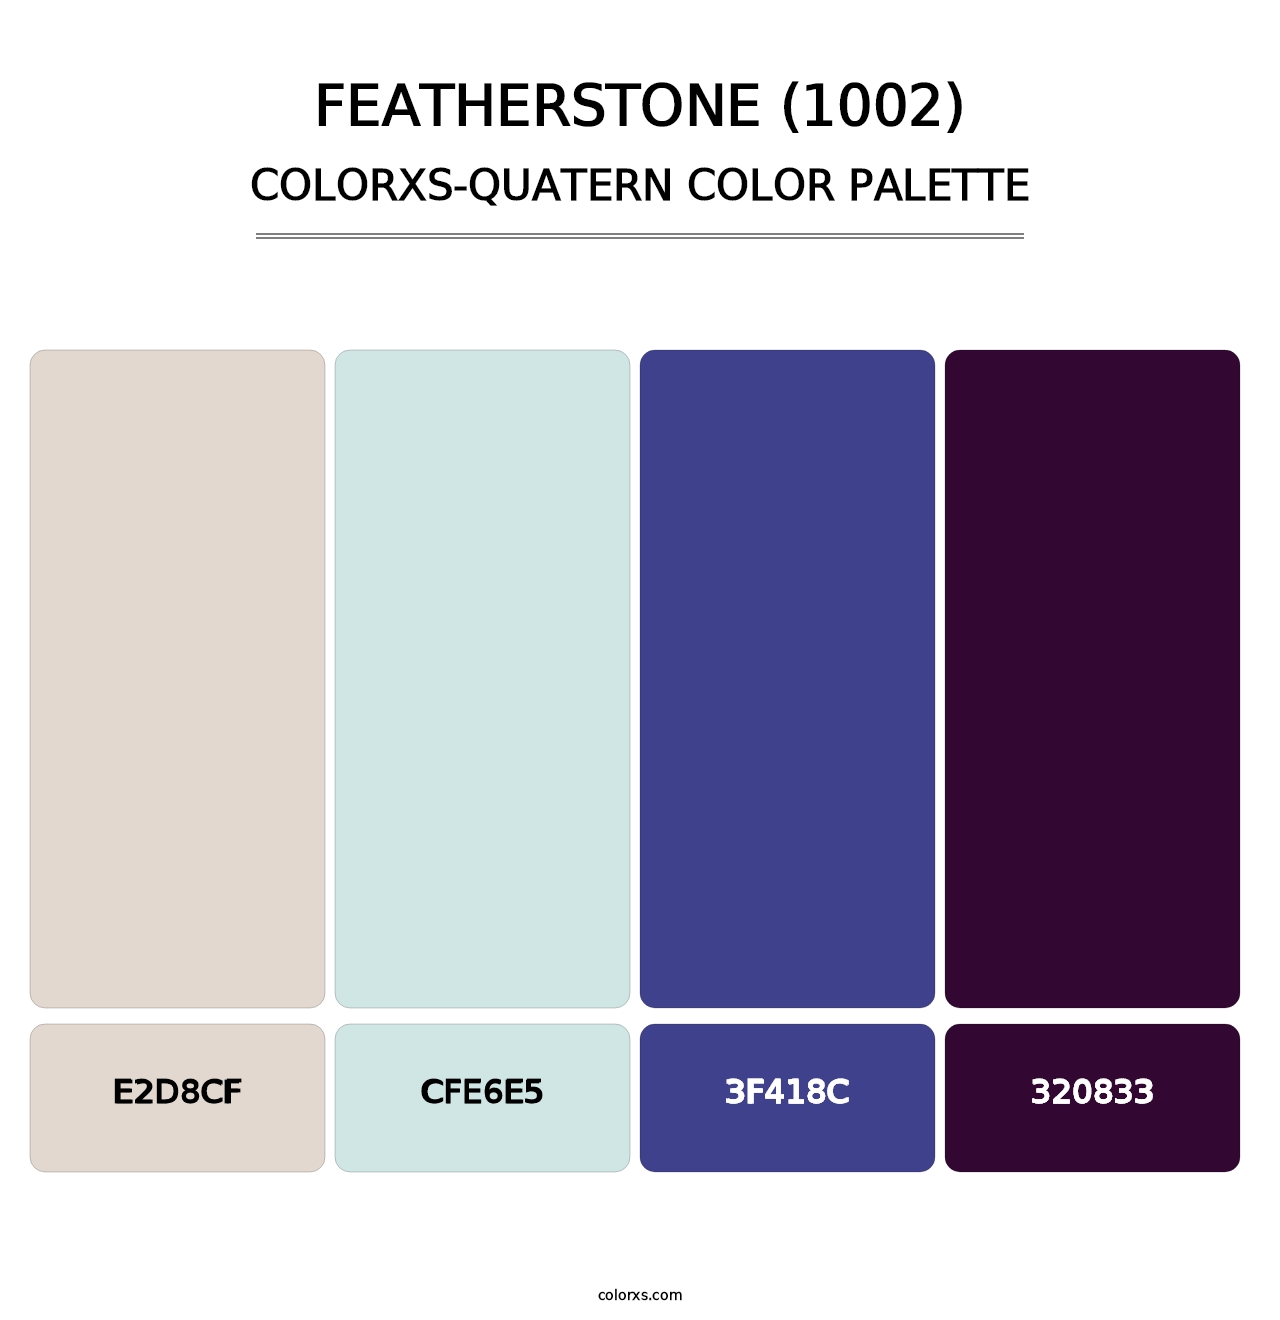 Featherstone (1002) - Colorxs Quatern Palette